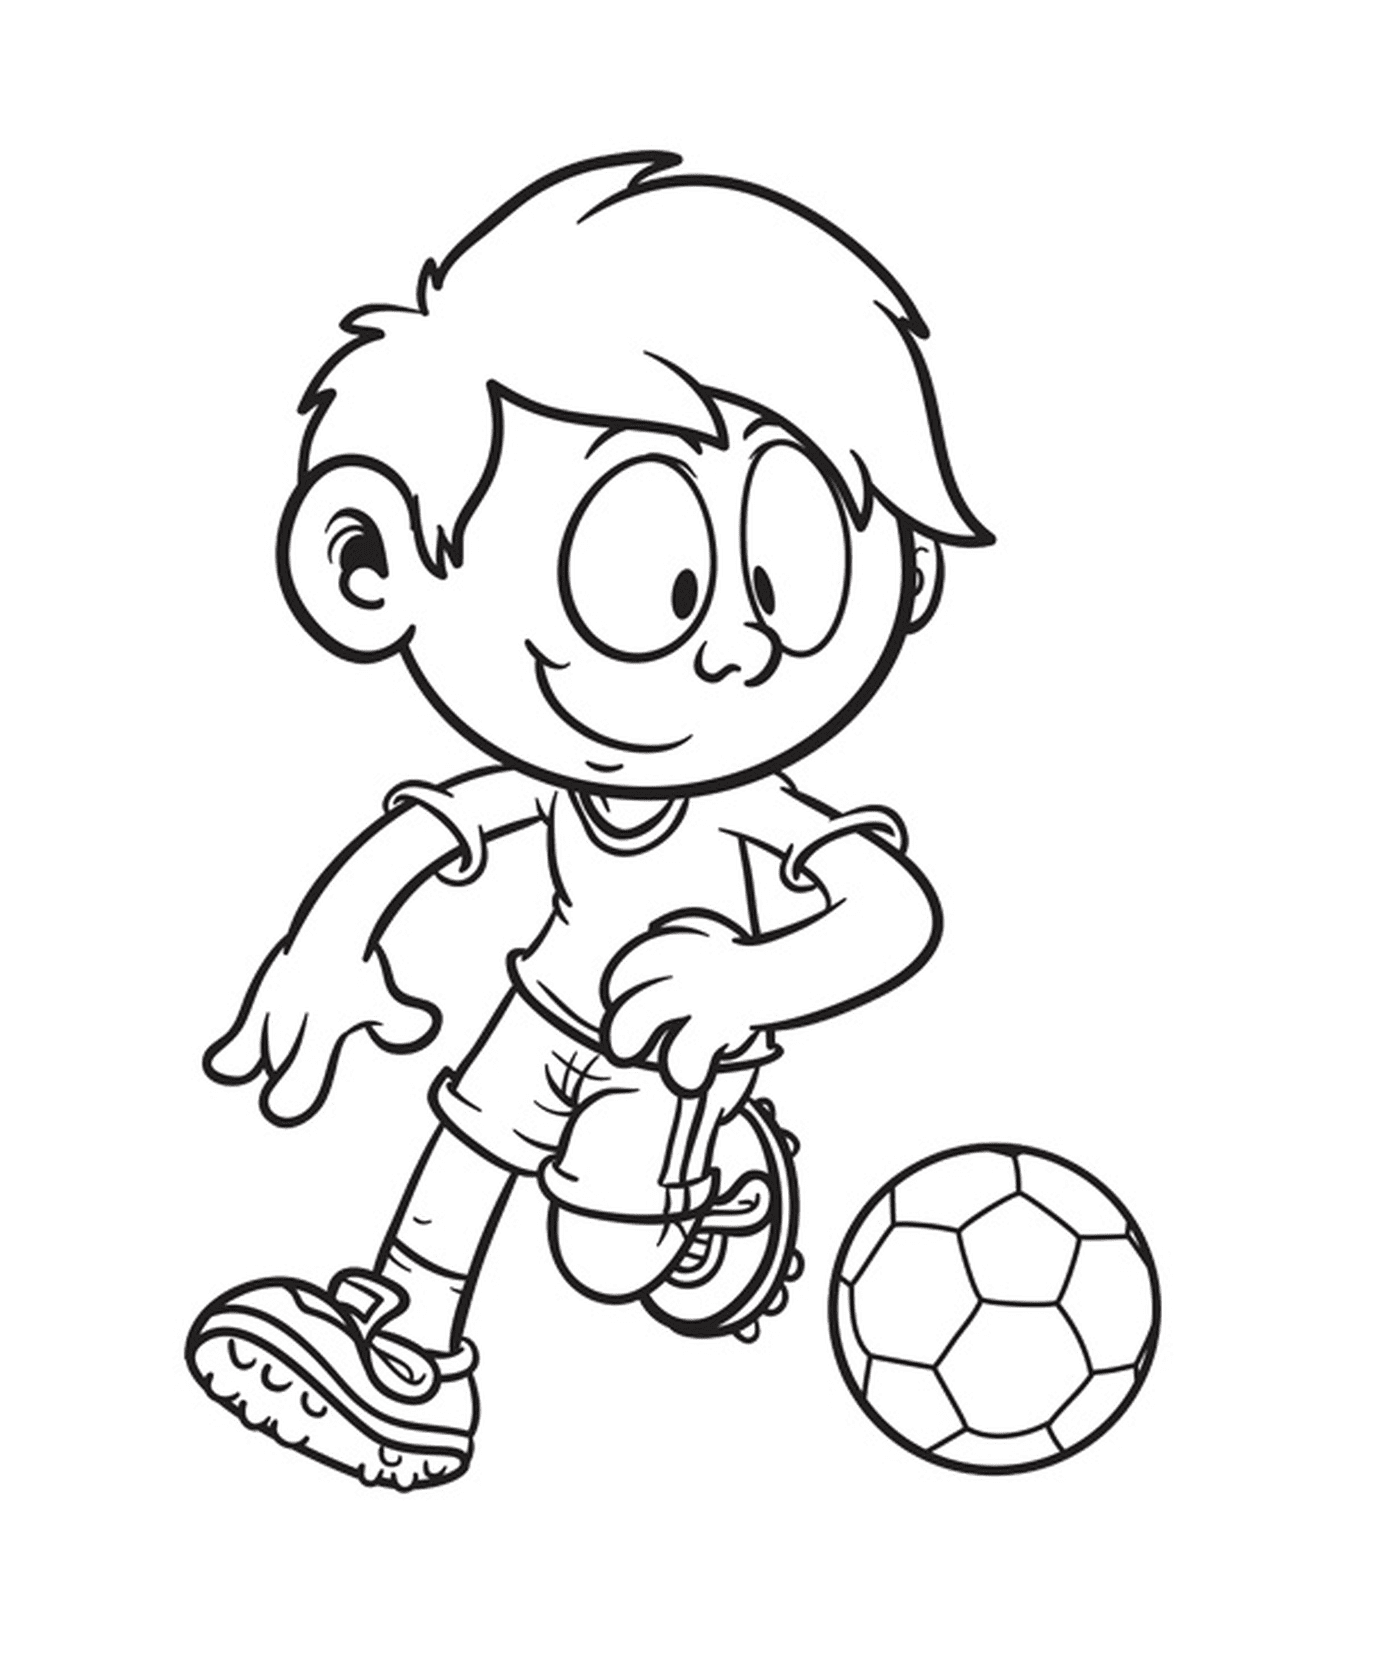  Ten-year-old boy playing football 